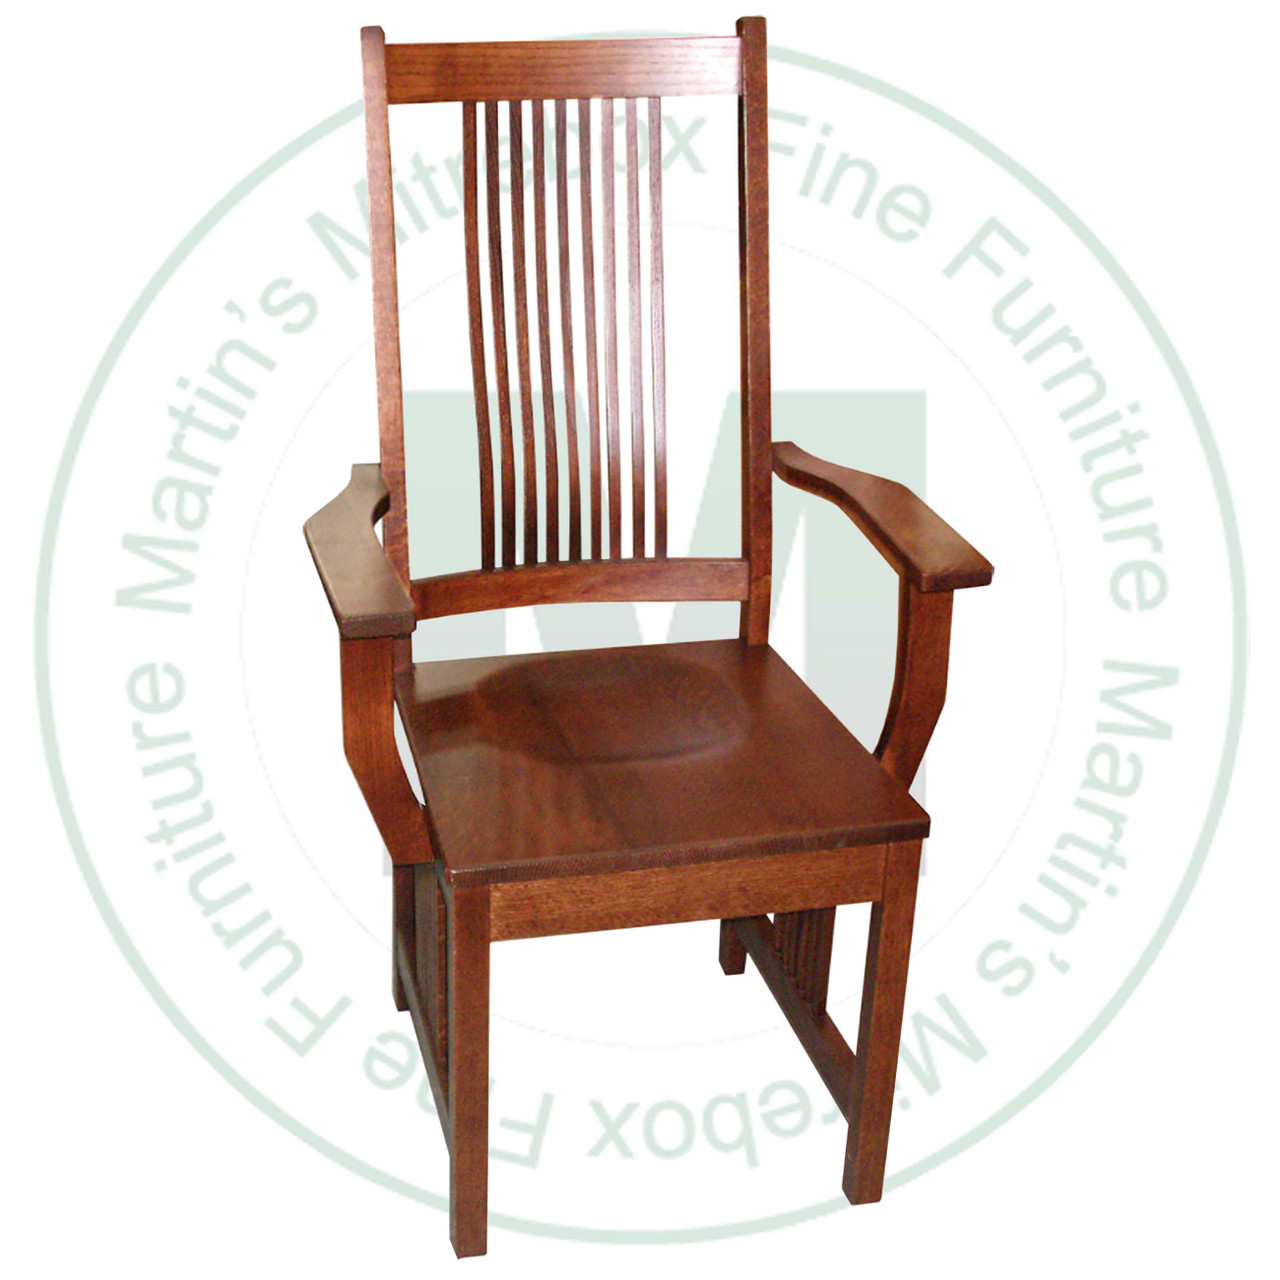 Oak Royal Mission Arm Chair Has Wood Seat